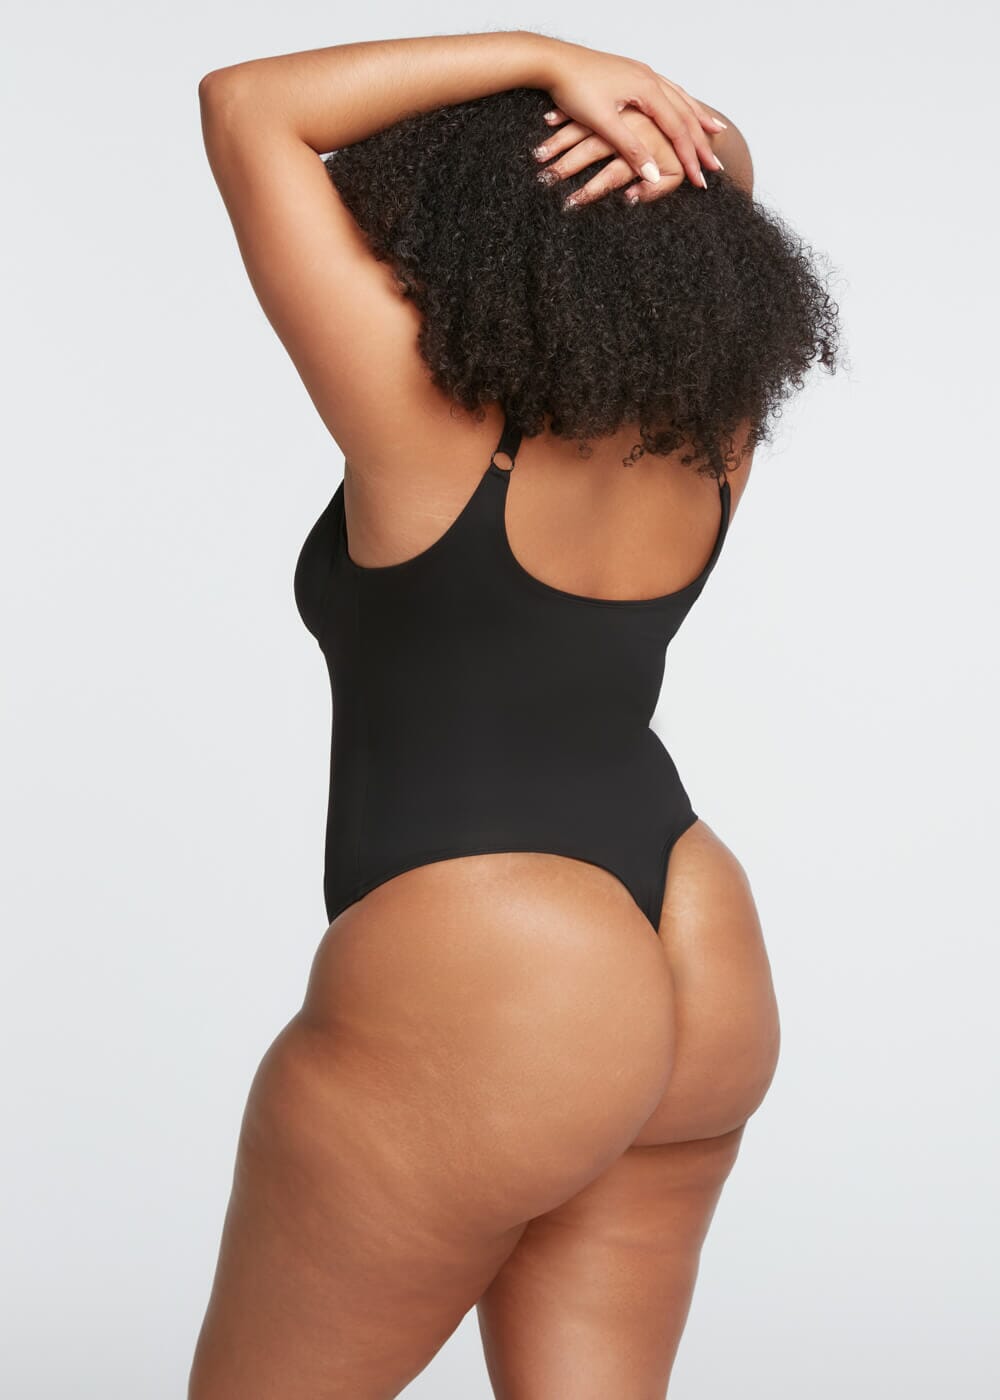 She's Waisted - Our Mesh Thong Bodysuit on babe @savannahhperkinss ❤️ # sheswaisted #shapewear